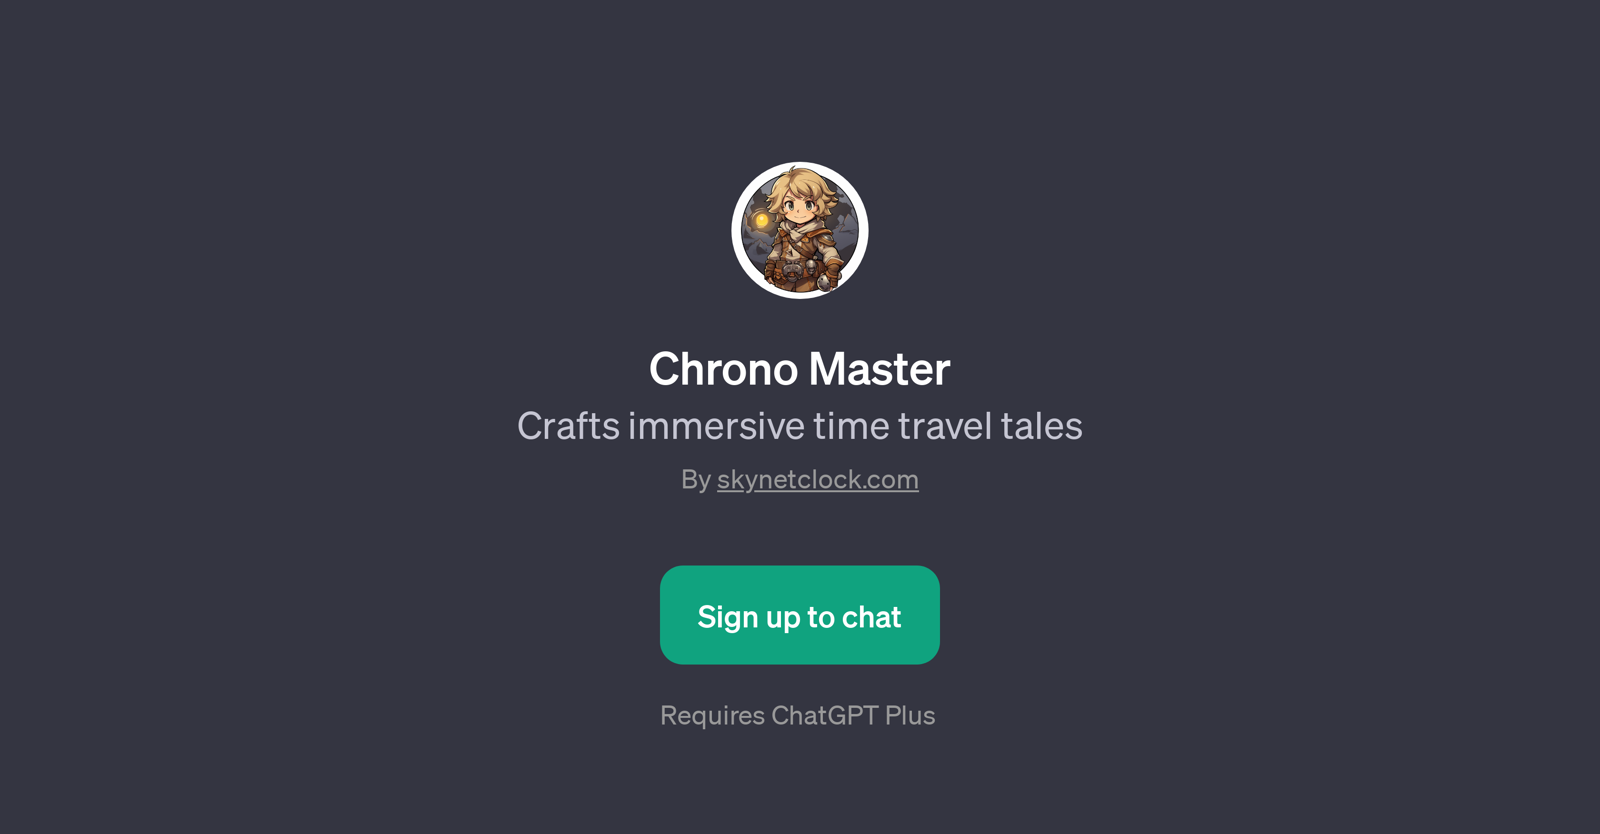 Chrono Master website